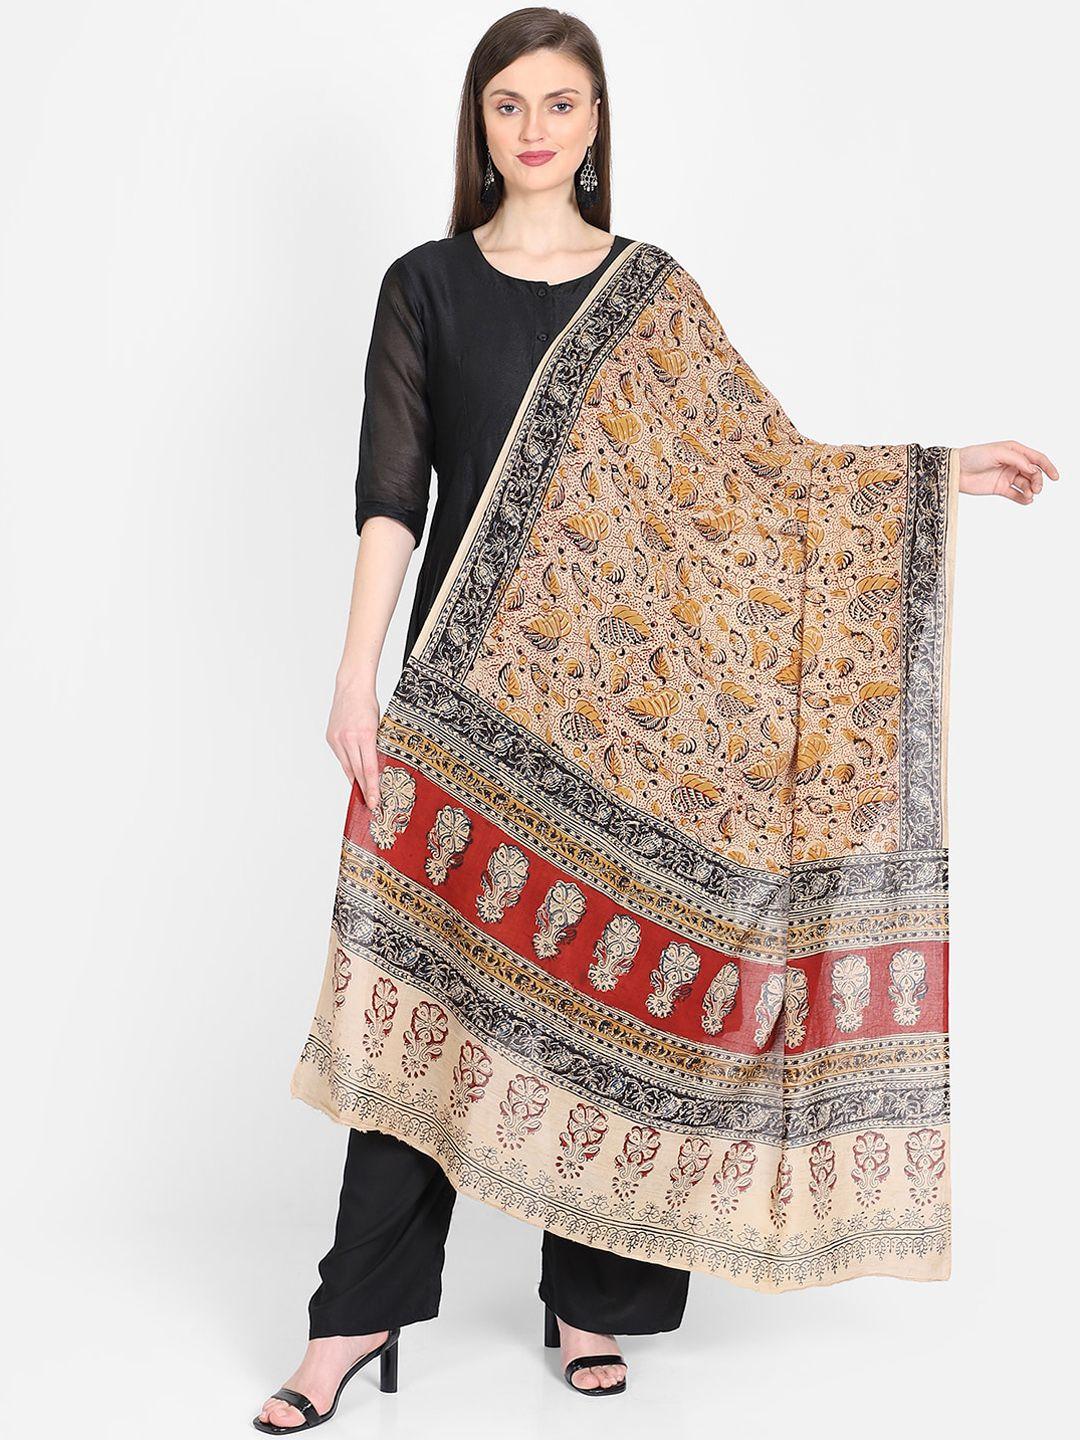 the-weave-traveller-brown-&-black-kalamkari-printed-cotton-sustainable-dupatta